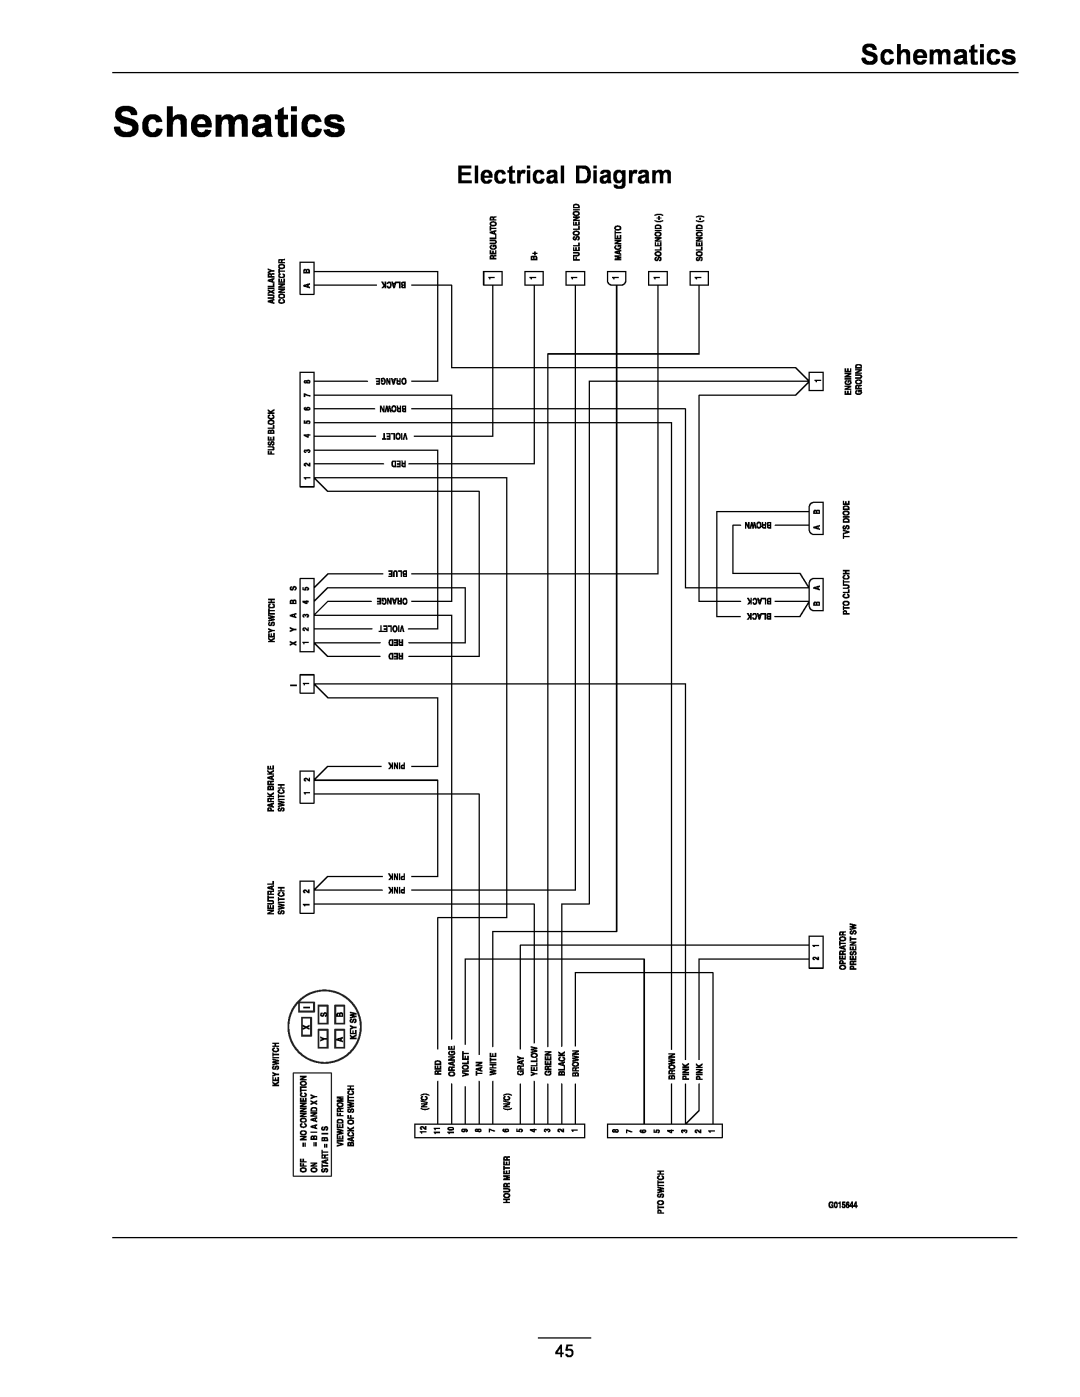 Exmark 920, 000 & higher manual Schematics, Electrical Diagram 